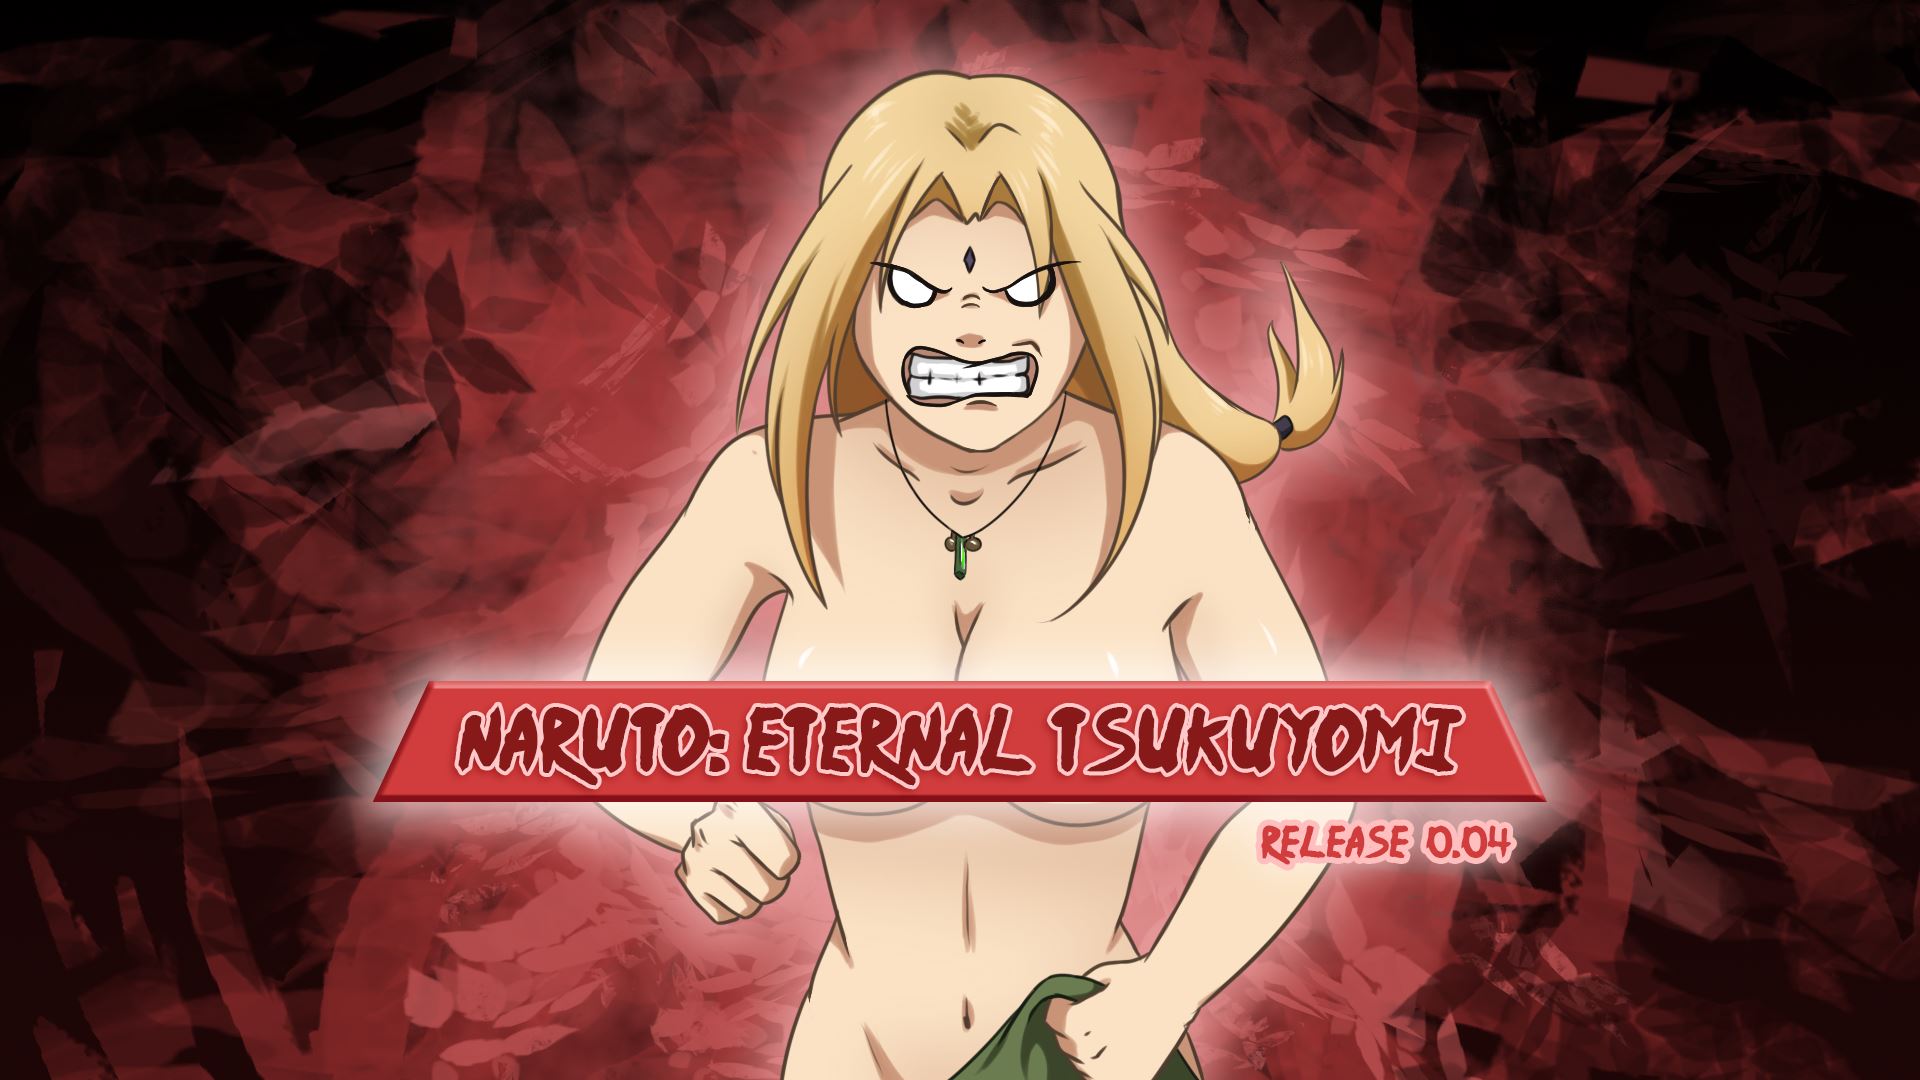 Ren'py] Naruto: Eternal Tsukuyomi - v0.11.8 by Kiobe 18+ Adult xxx Porn Game  Download